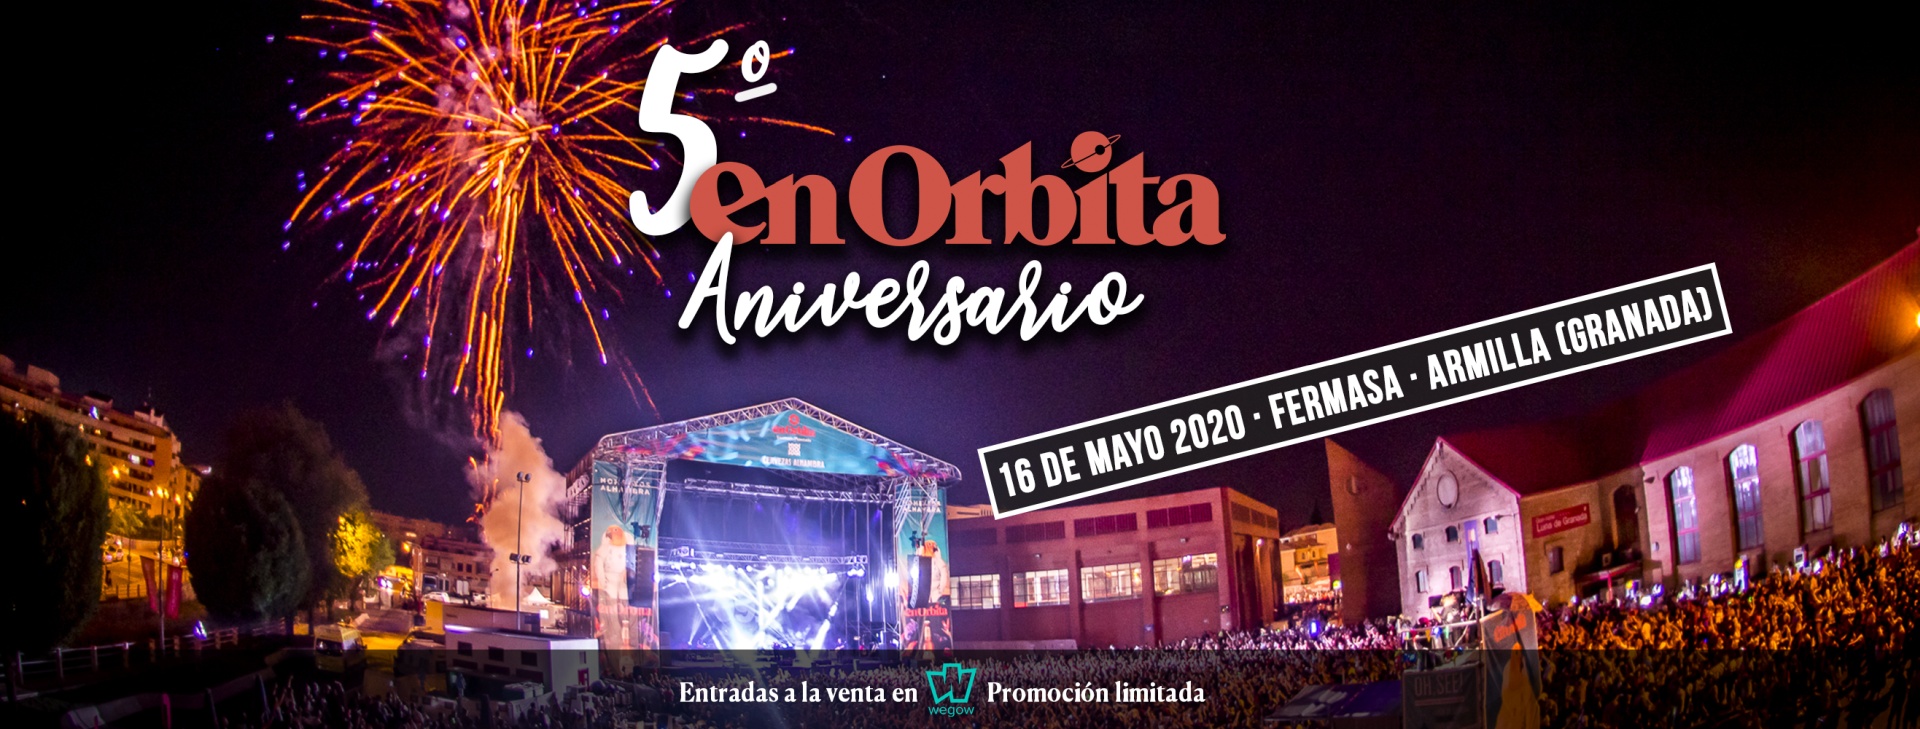 Festival en Orbita 2020